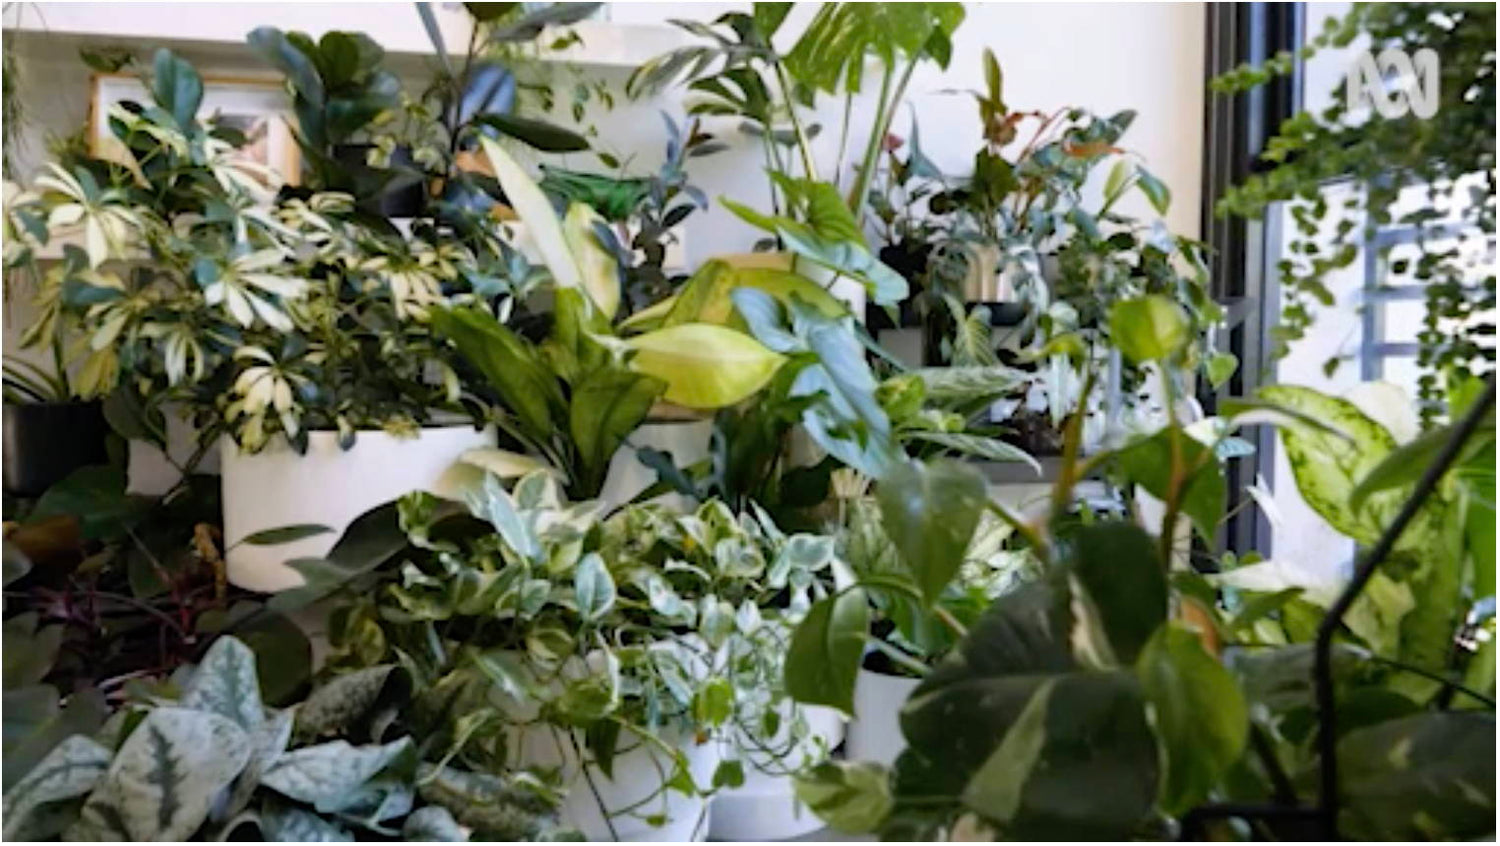 Feed #65 - Regrowing food scraps & a real indoor jungle!